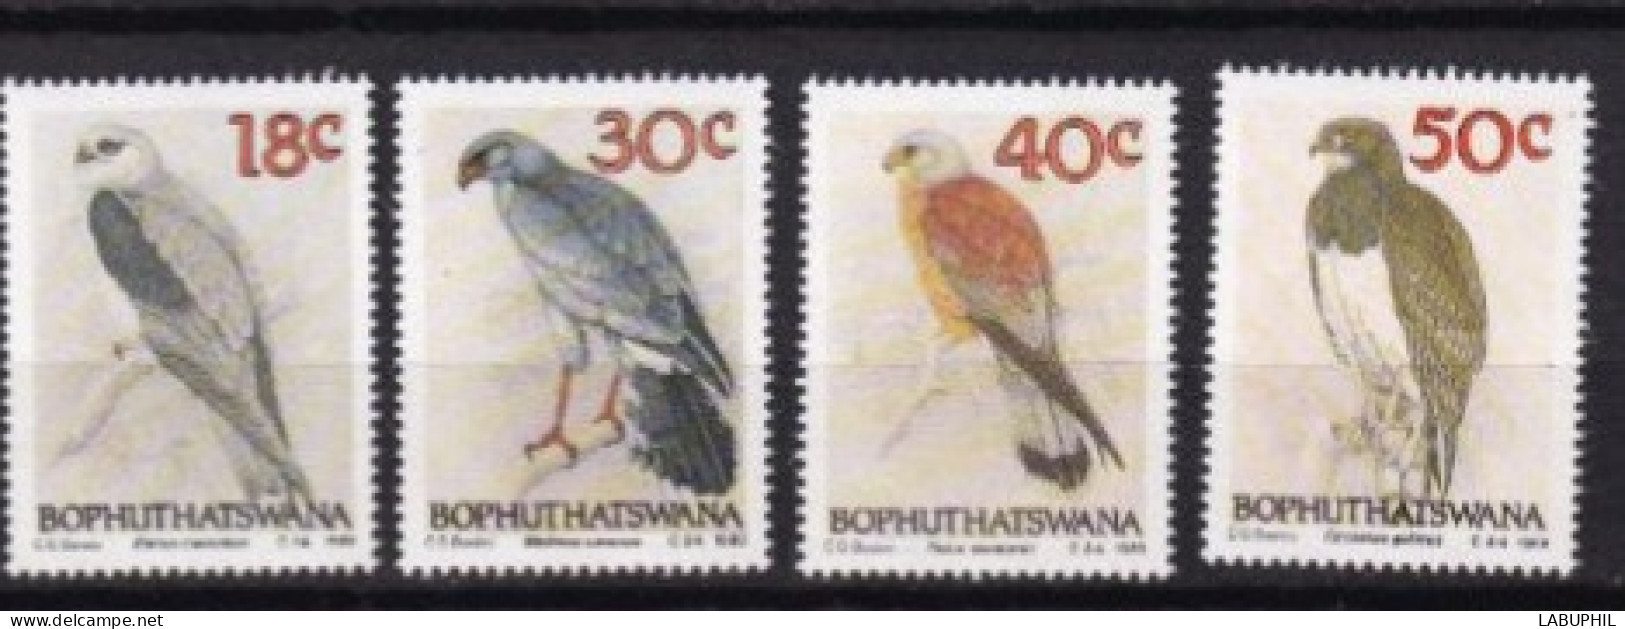 BOPHUYHATSWANA MNH 1989 Faune Oiseaux Birds - Bophuthatswana